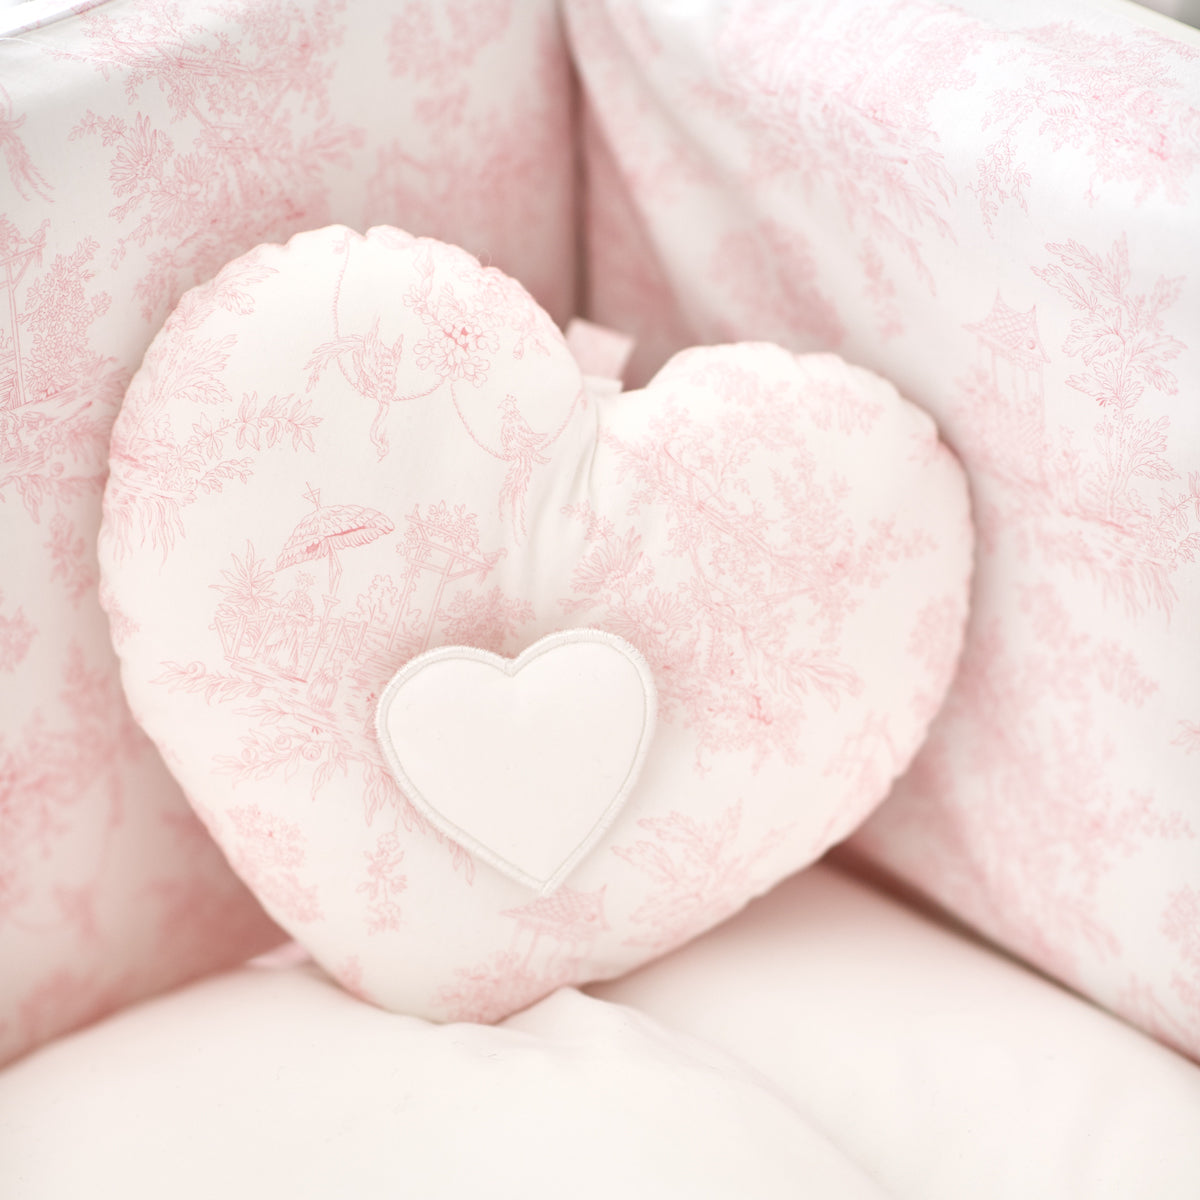 Theophile & Patachou Musical Cushion “Cloud” - Sweet Pink